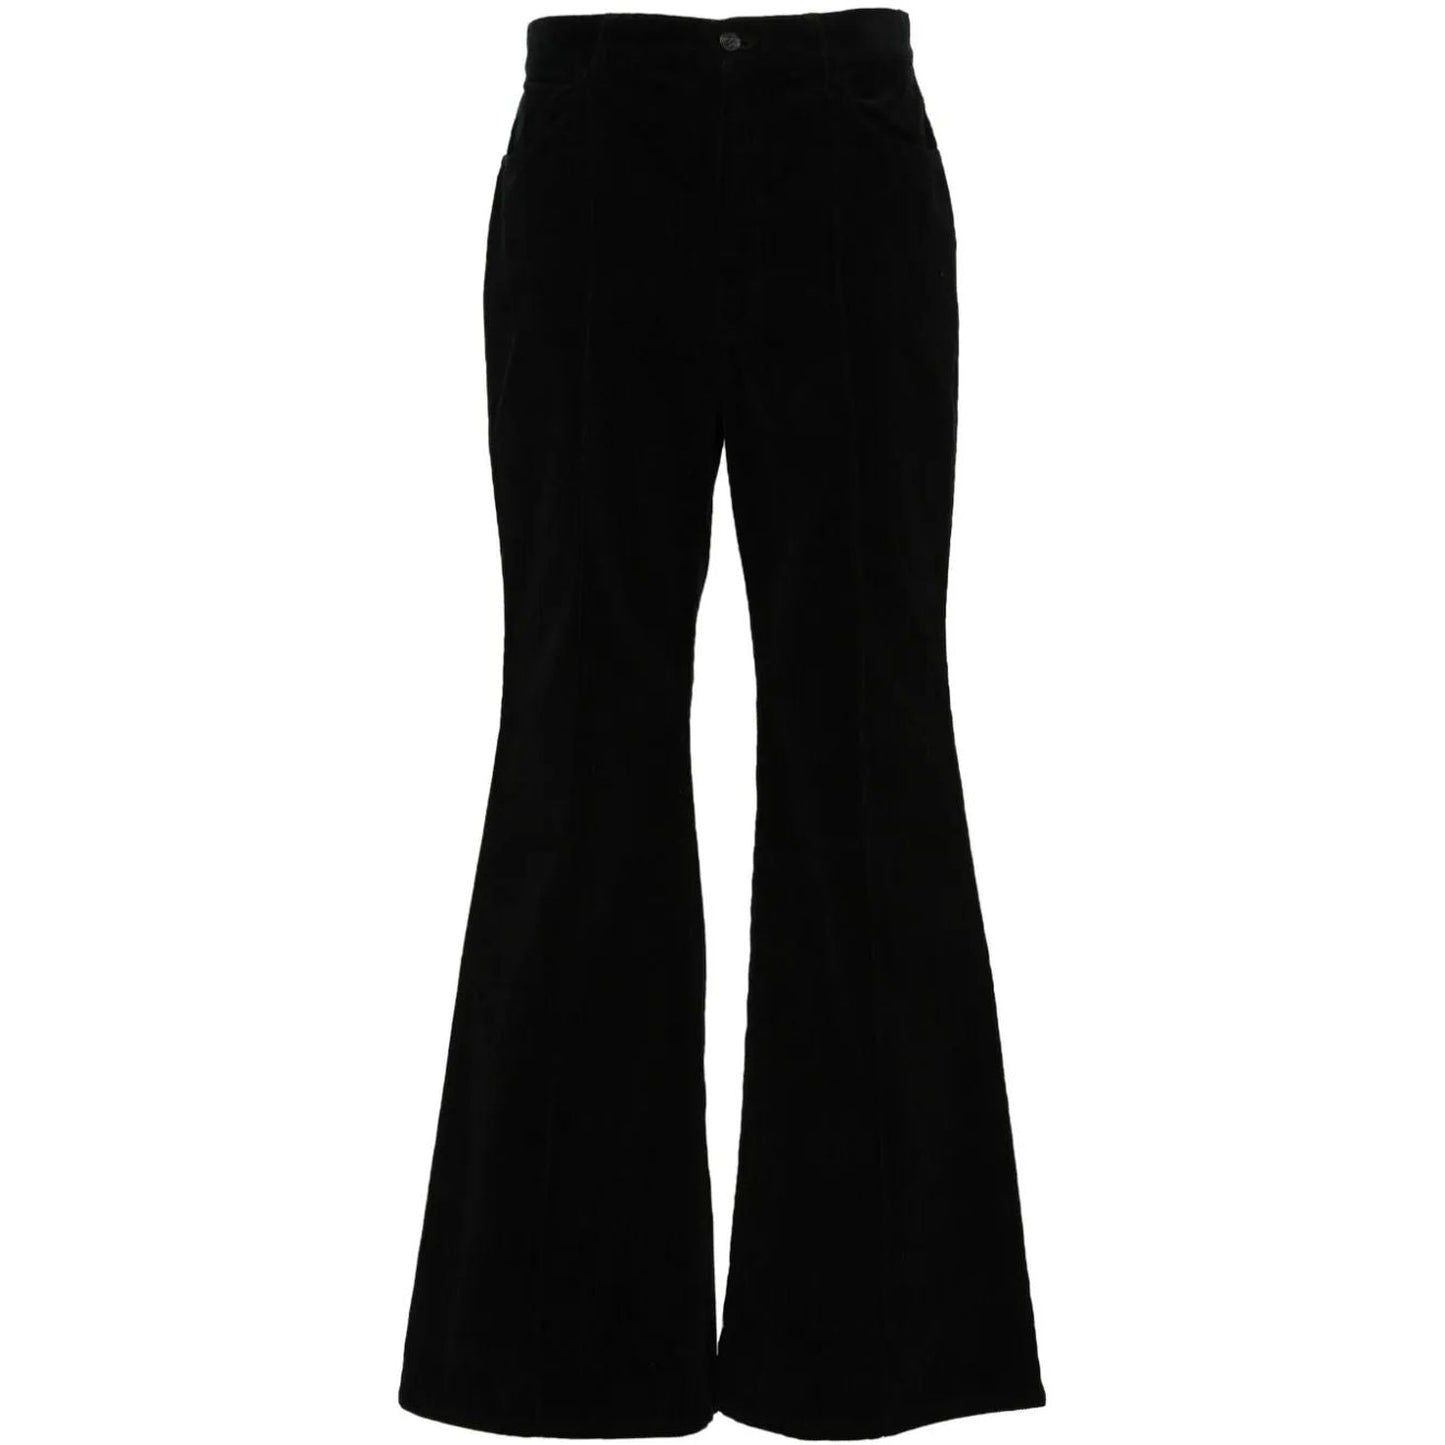 POLO RALPH LAUREN moteriškos juodos laisvalaikio kelnės Flat front pants